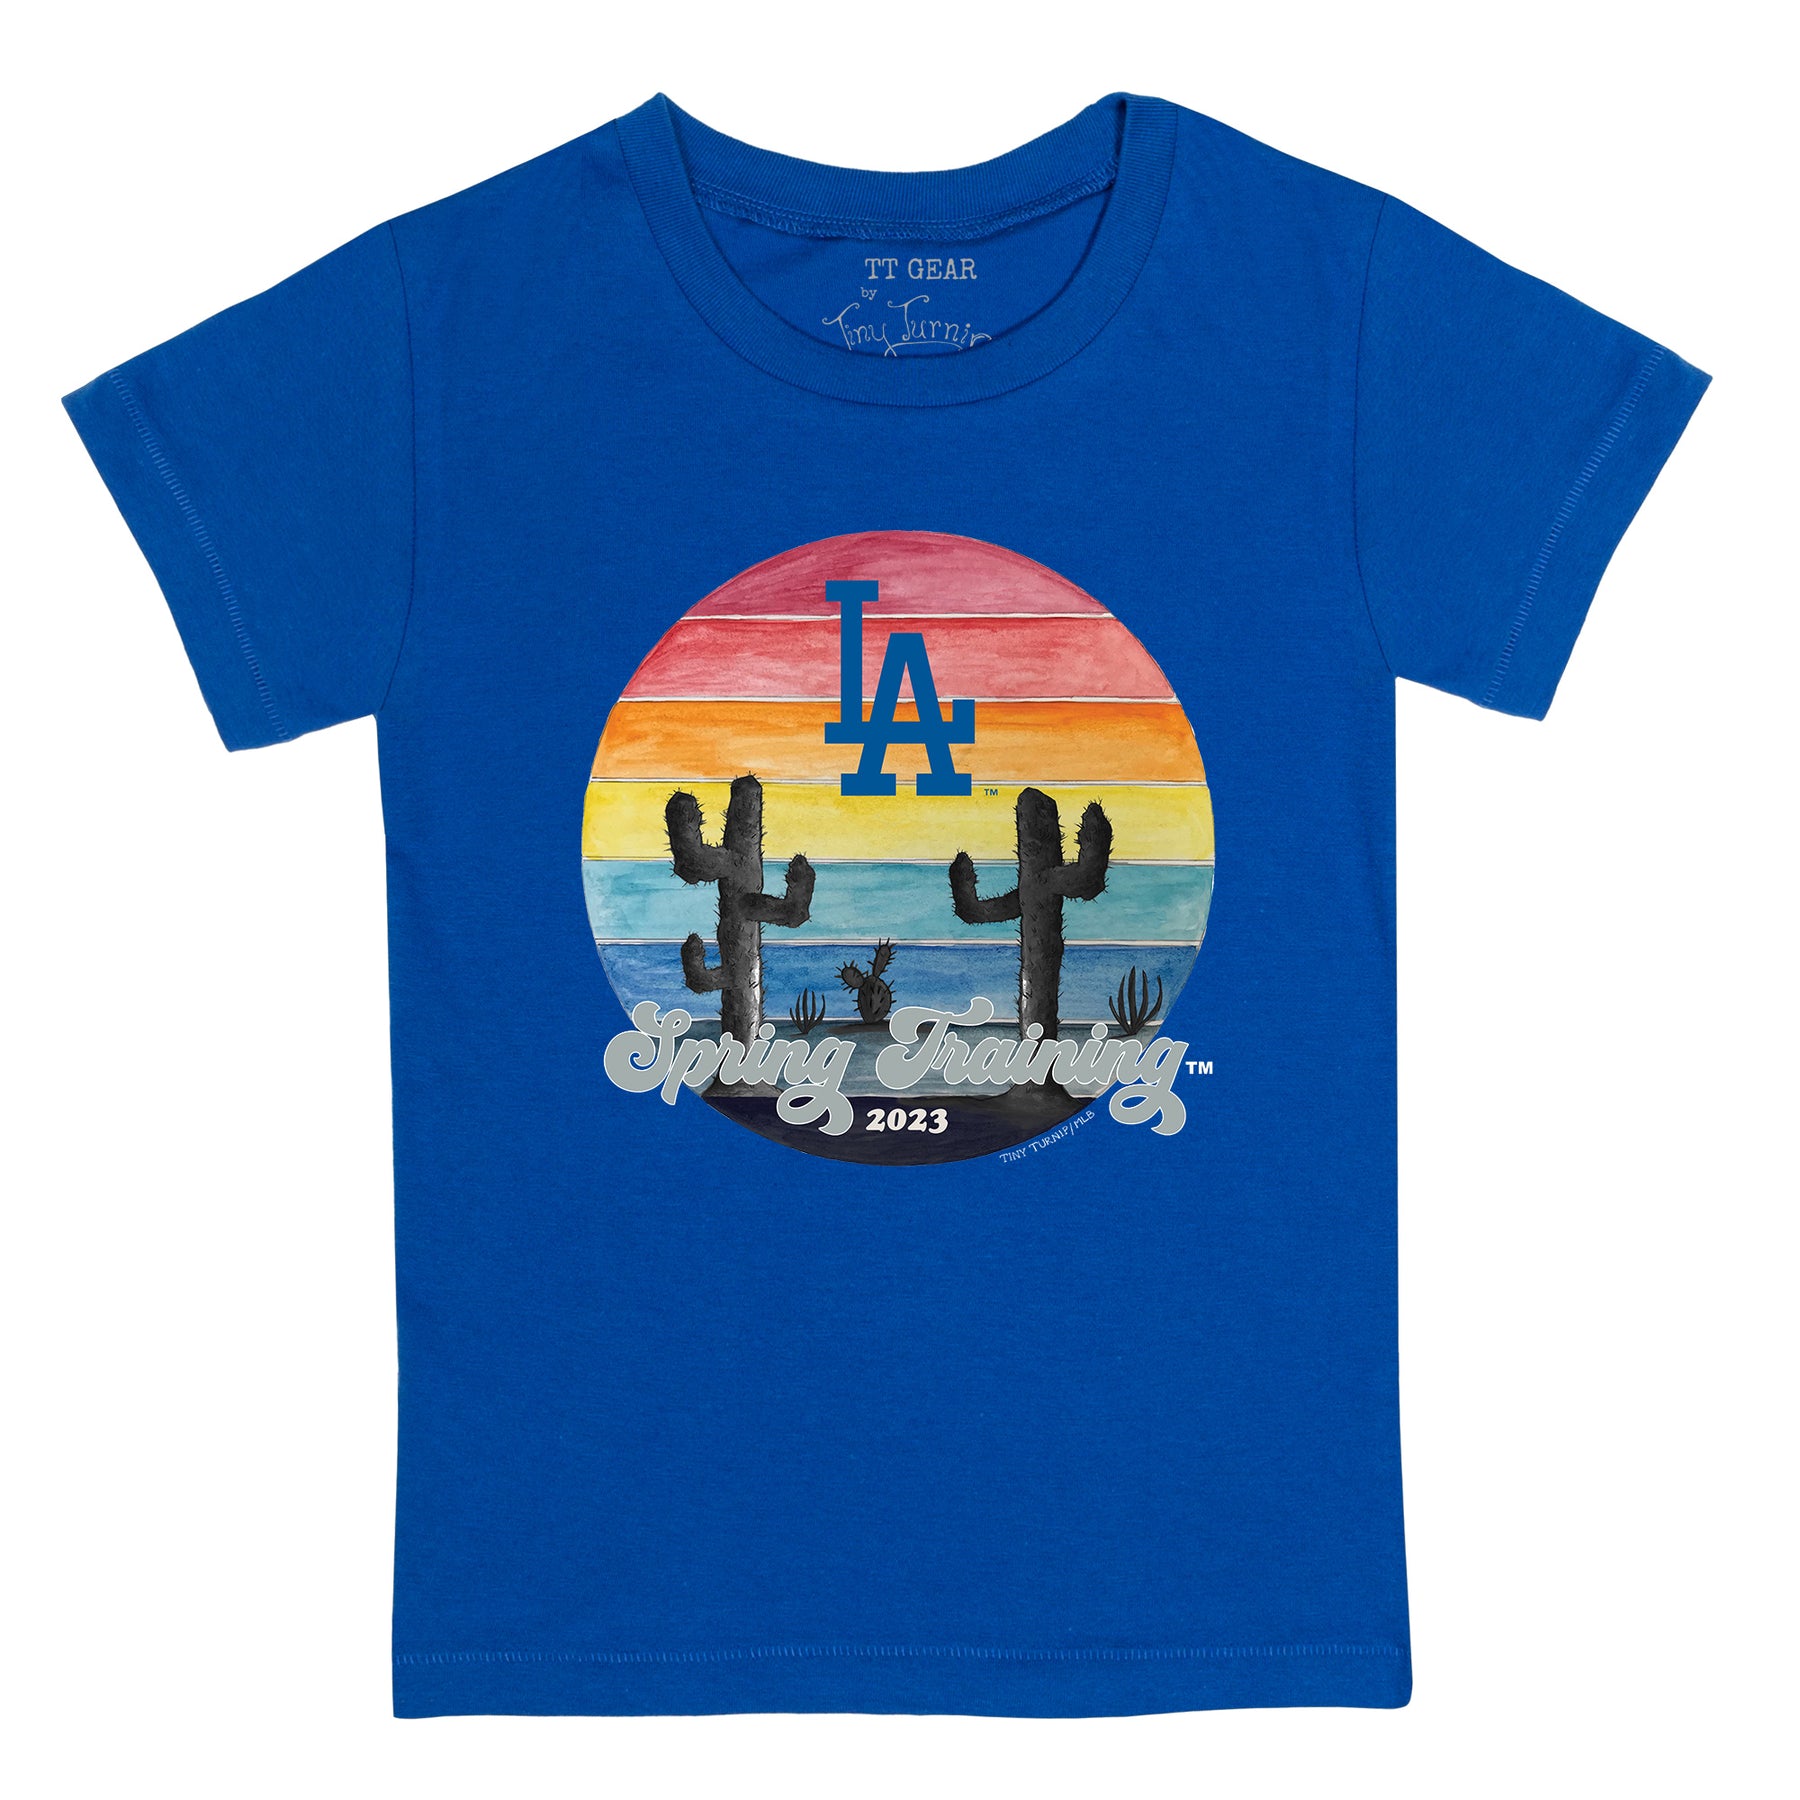 Los Angeles Dodgers Spring Training 2023 Tee Shirt